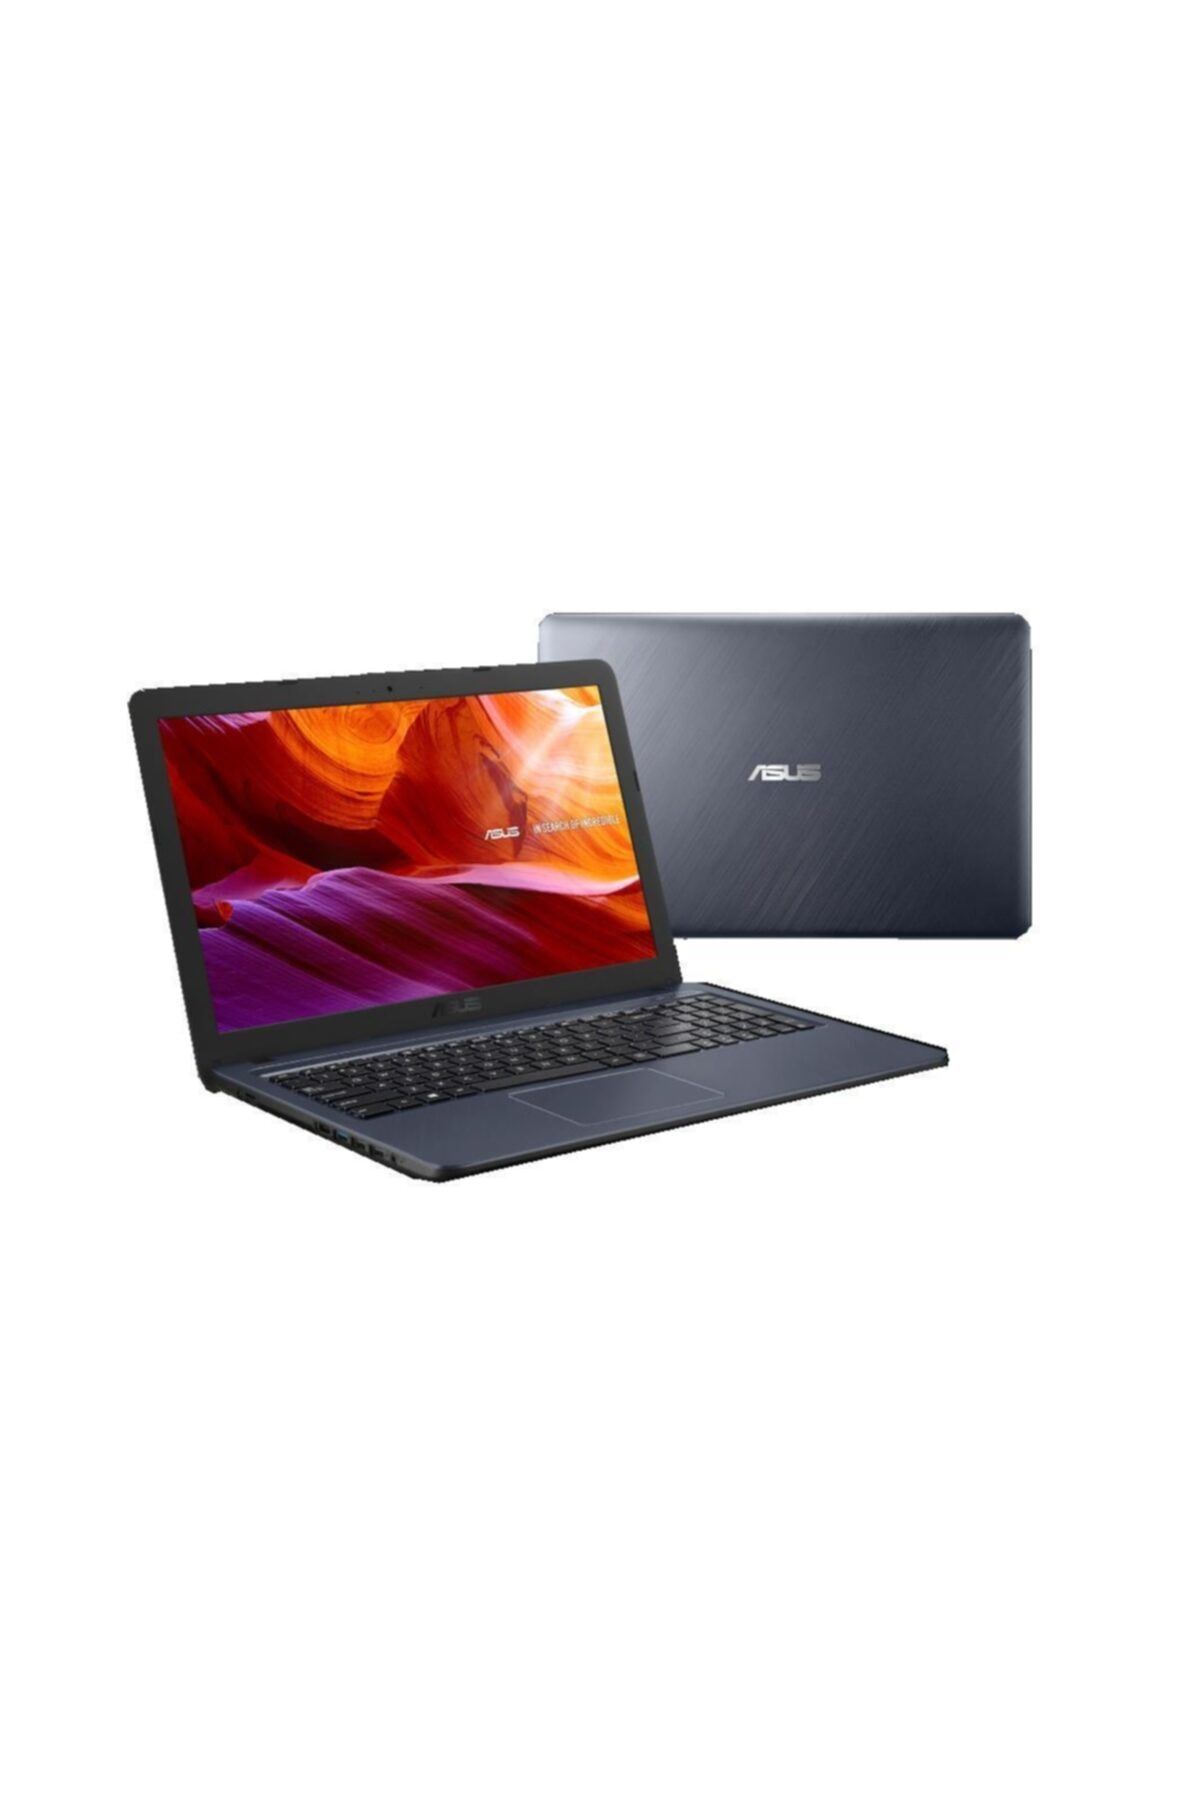 ASUS X543na-gq289 Cel N3350 4g 1tb 15,6 Endless Notebook